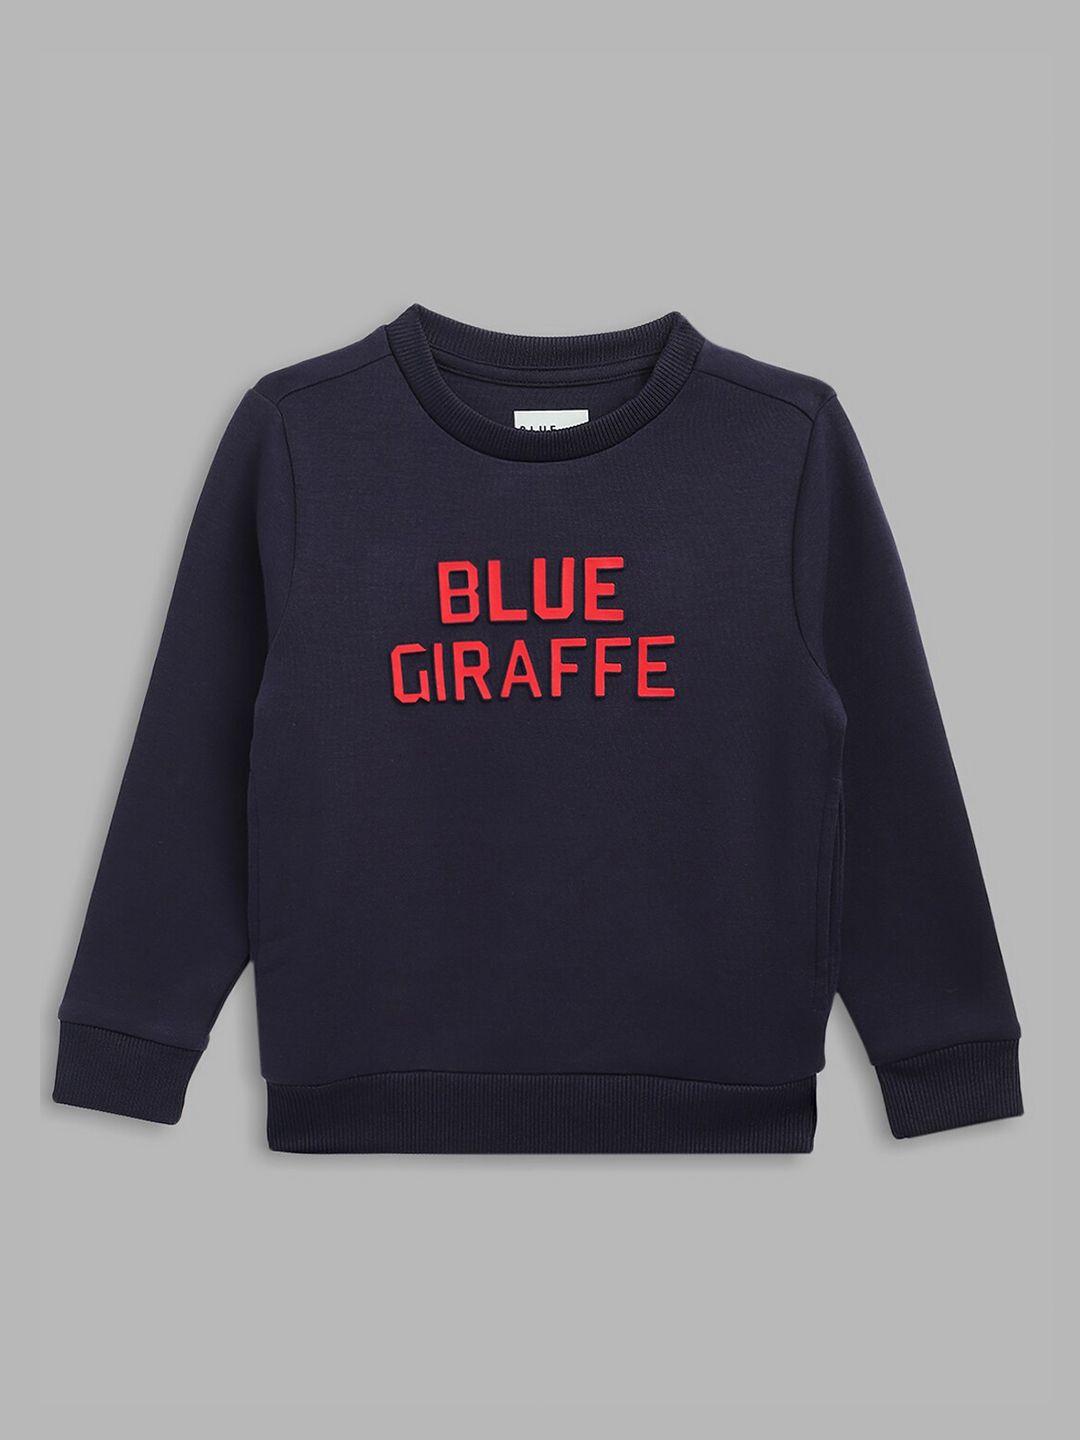 blue-giraffe-boys-navy-blue-printed-sweatshirt